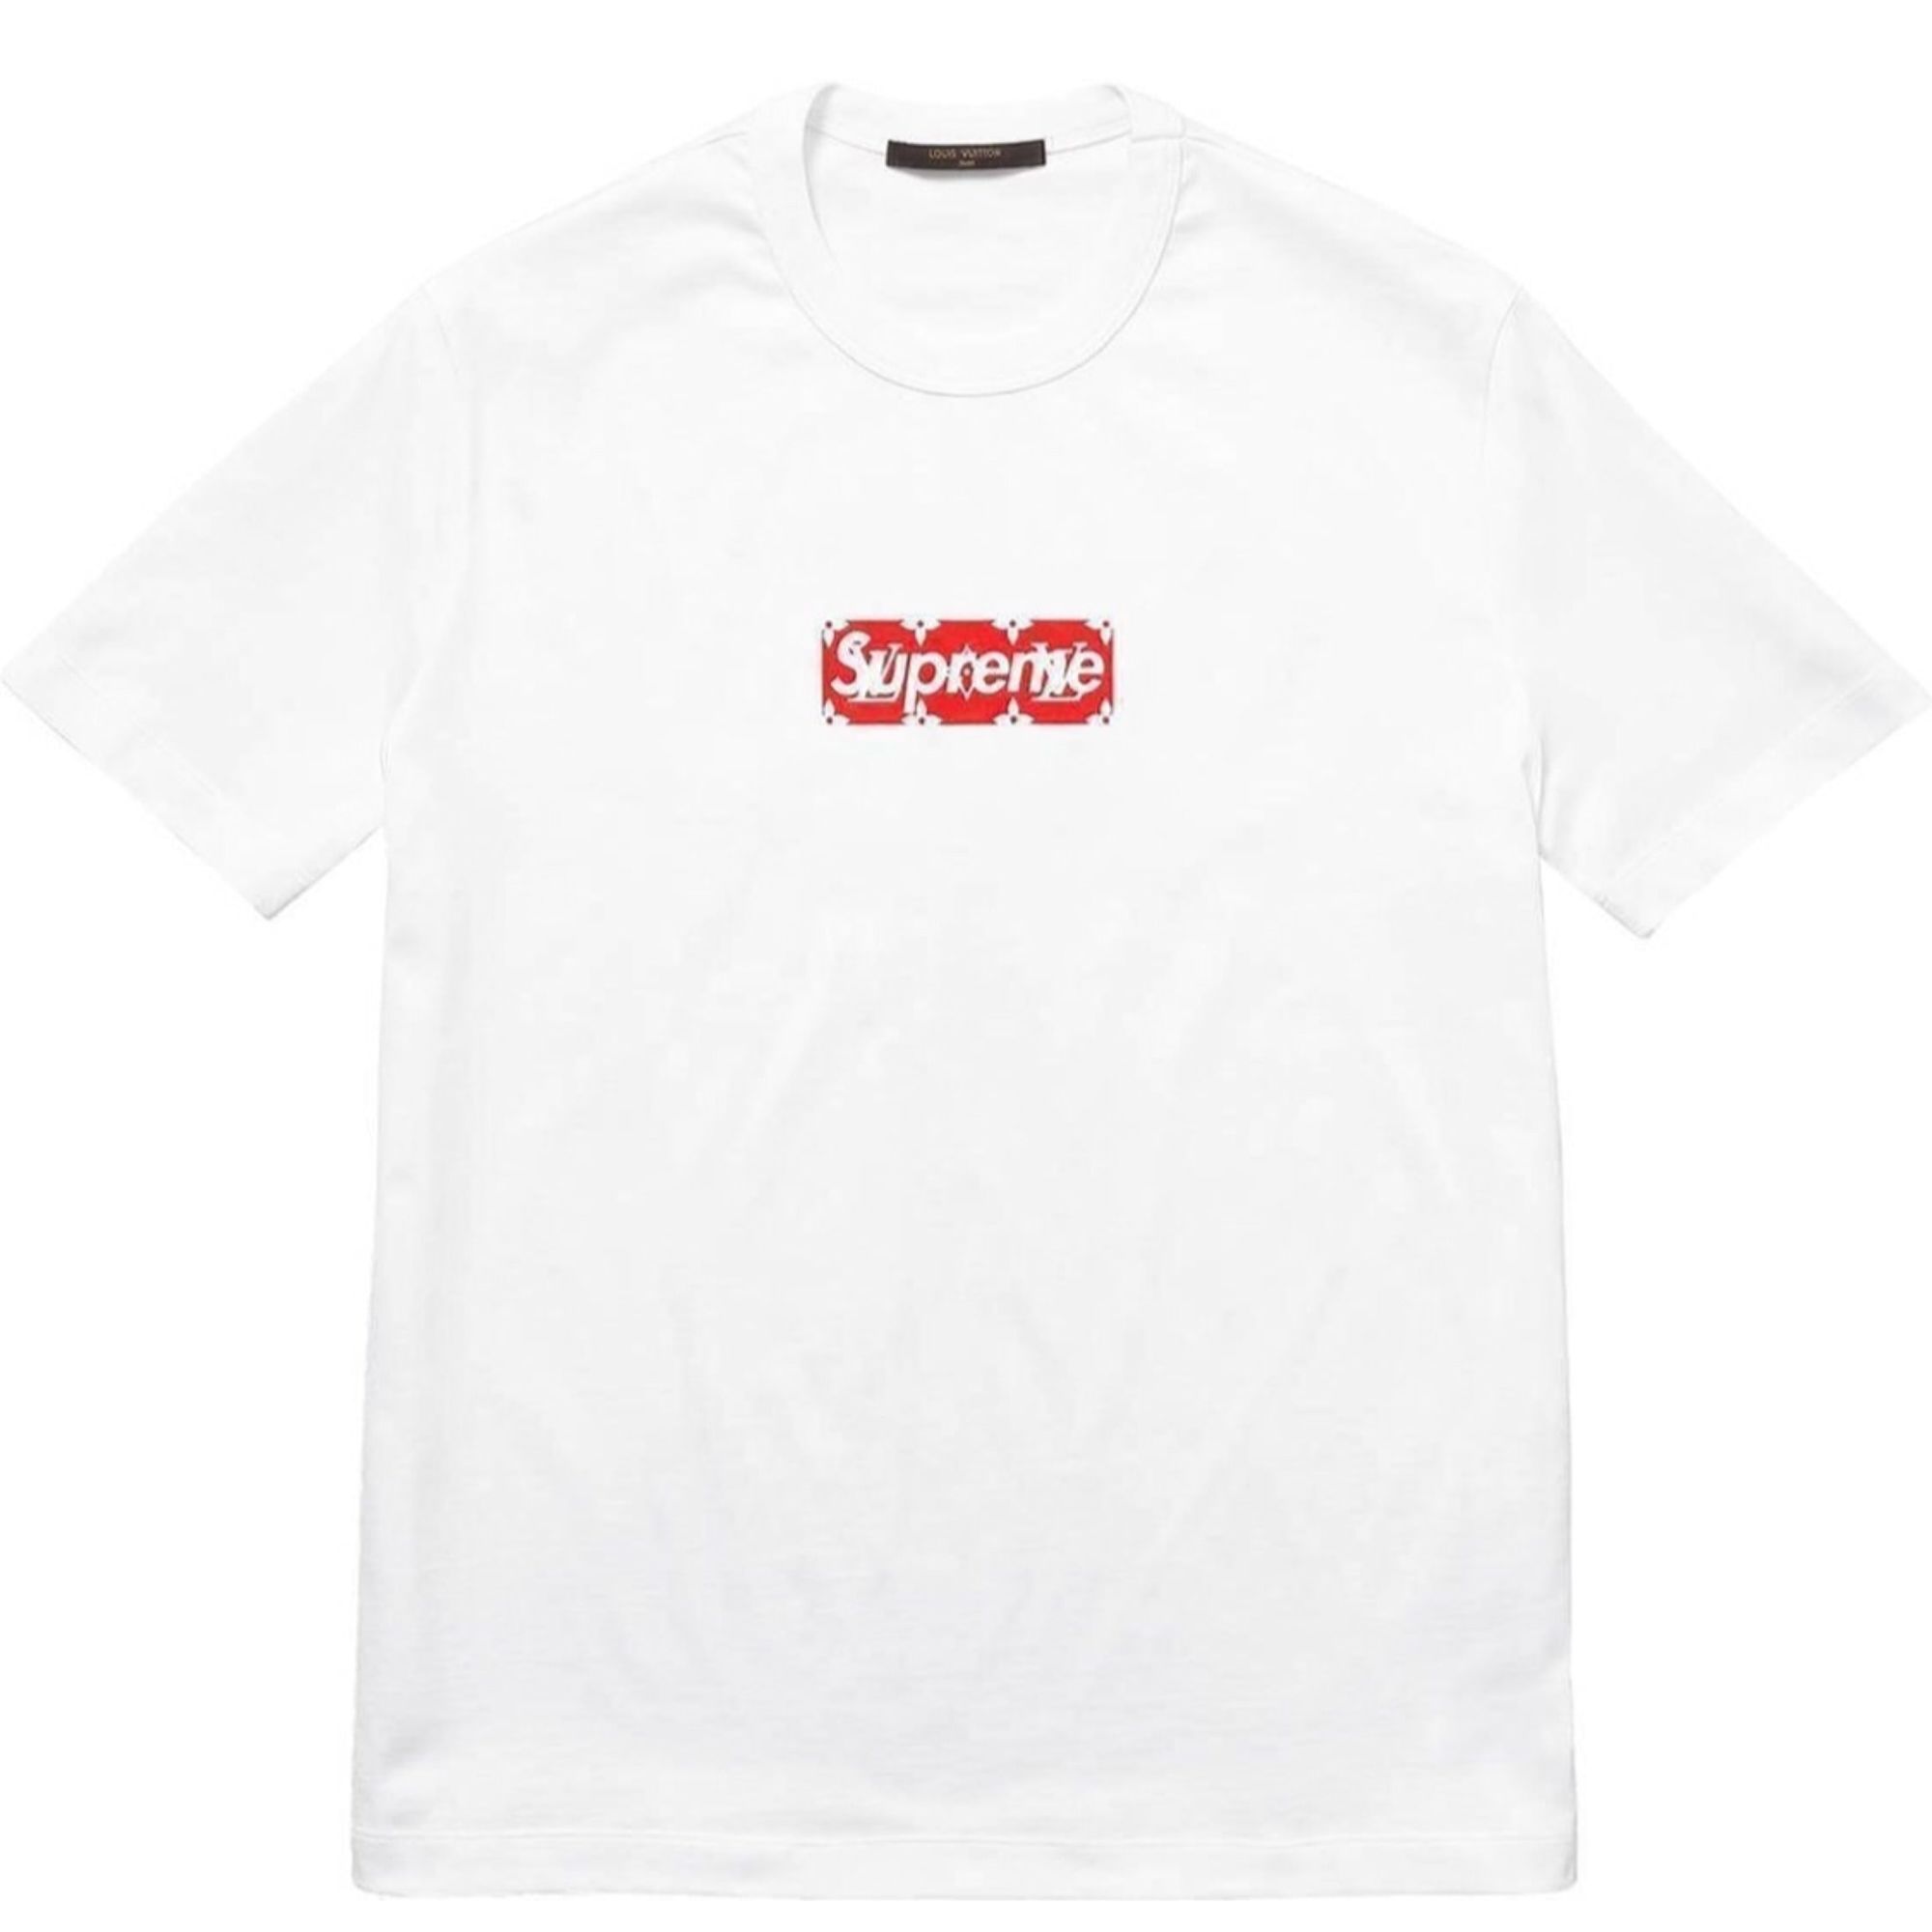 Supreme : les 5 t-shirts les plus chers avec box logo